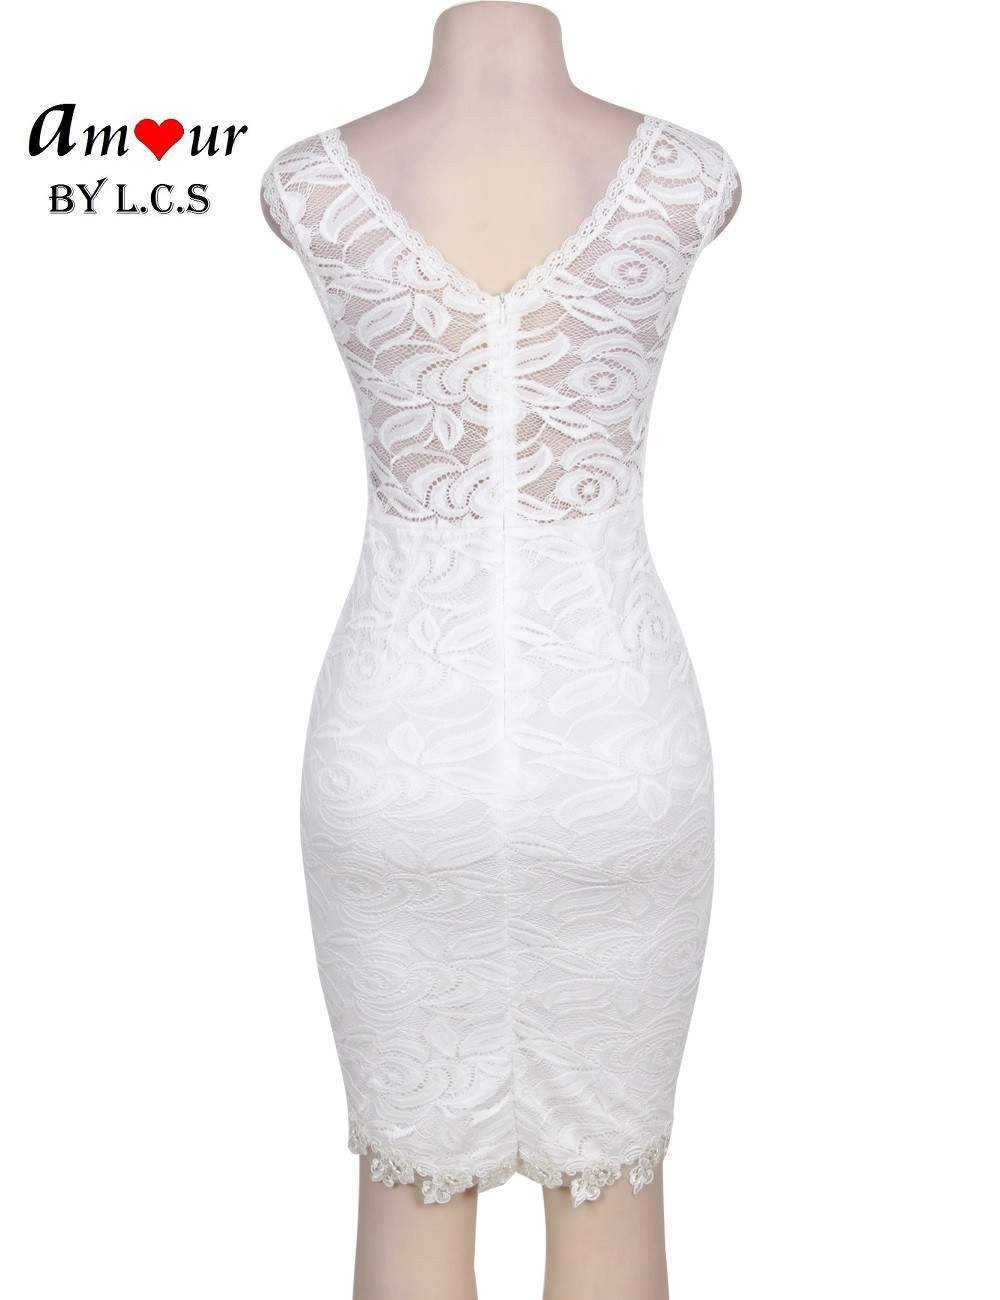 white lace dress on mannikin